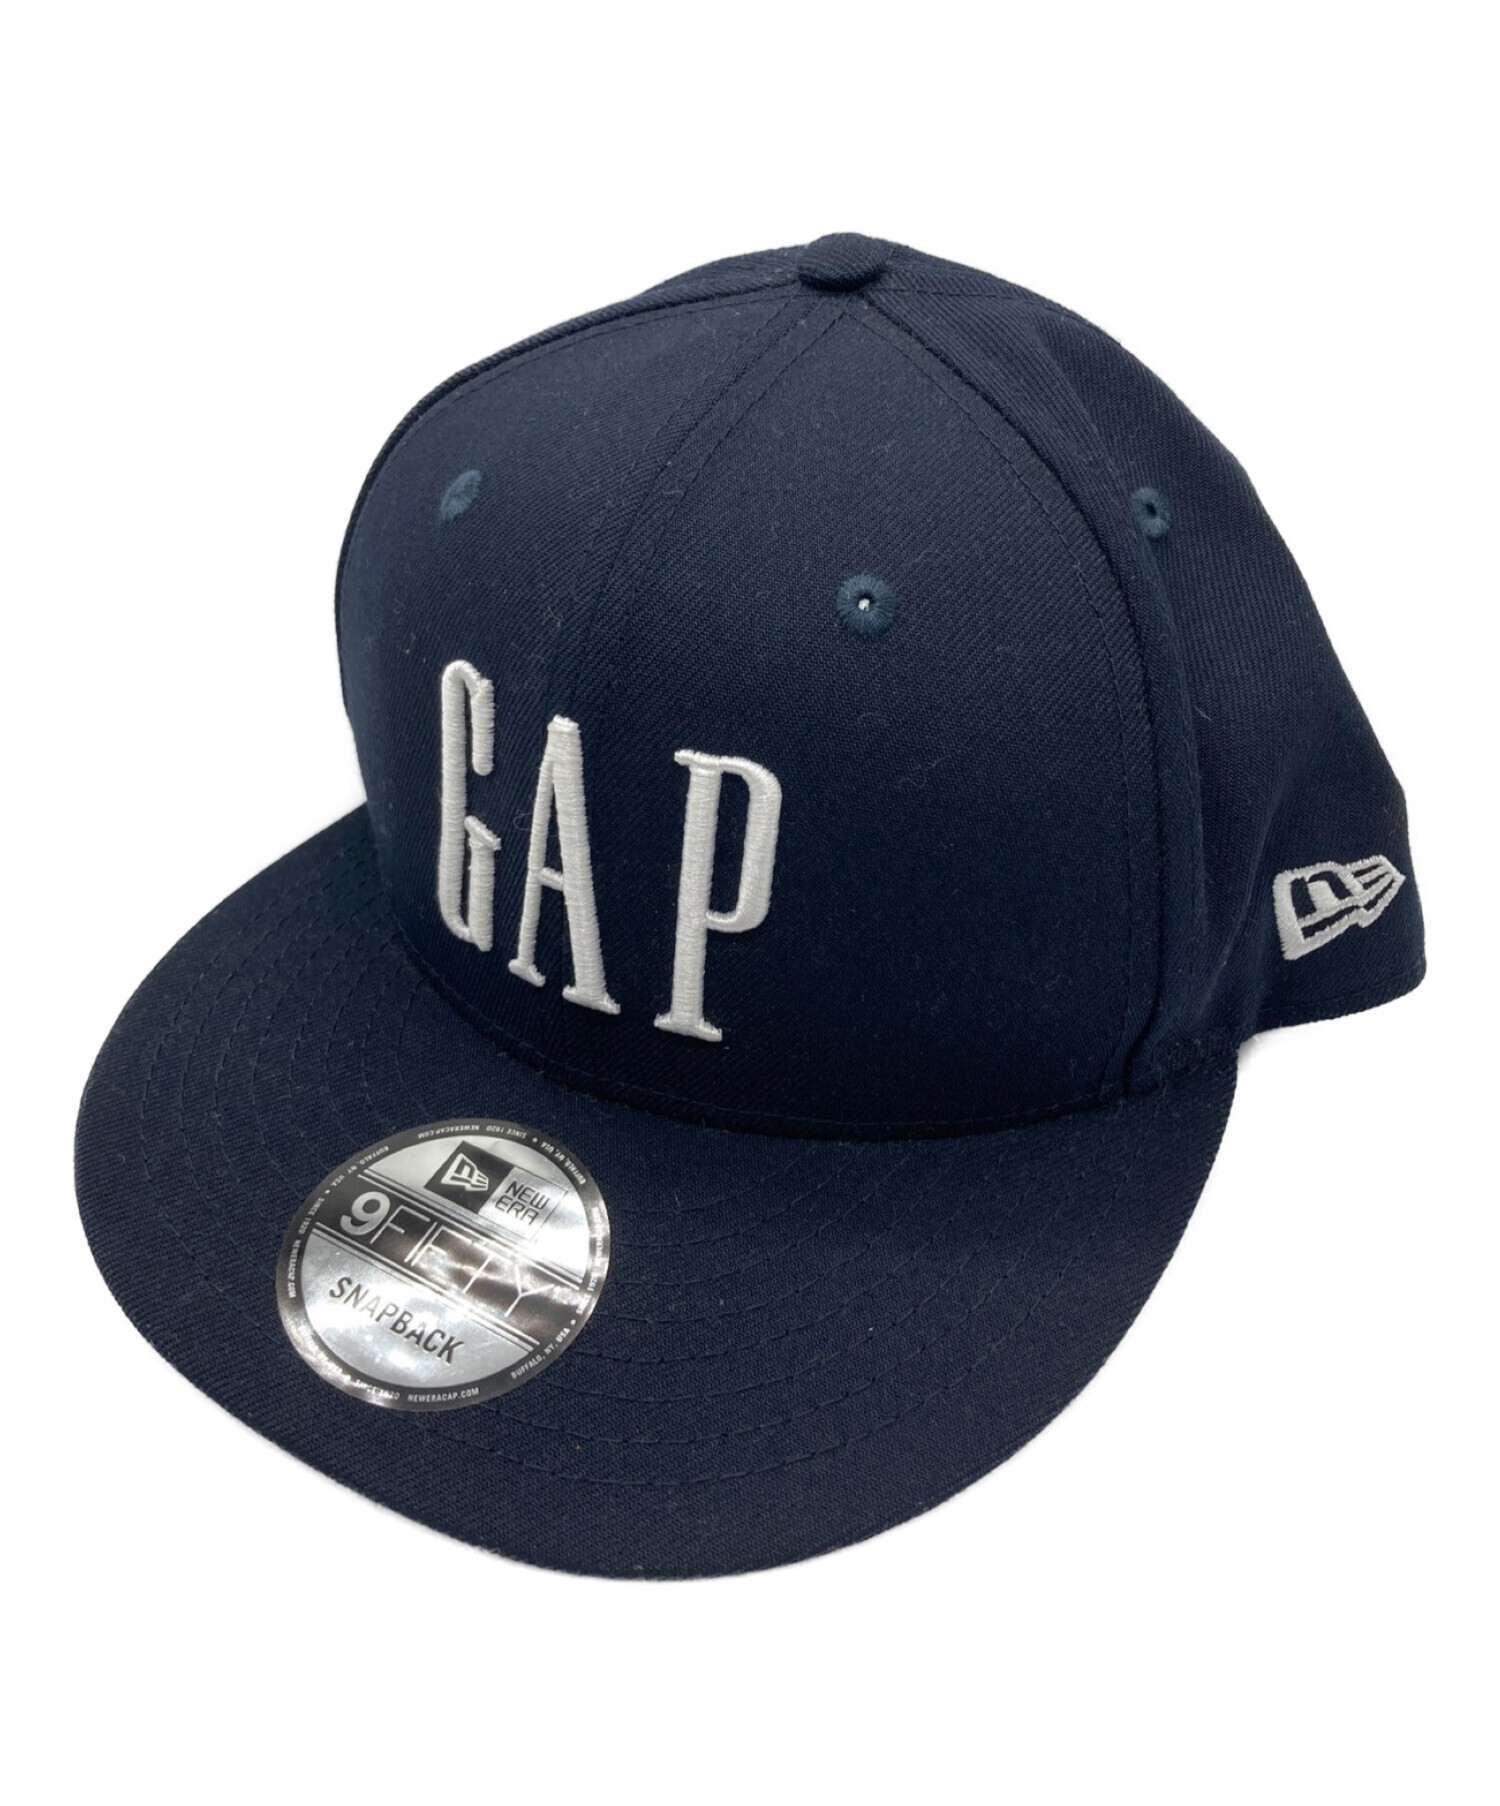 GAP ギャップ キャップ 帽子 ネイビー - 帽子